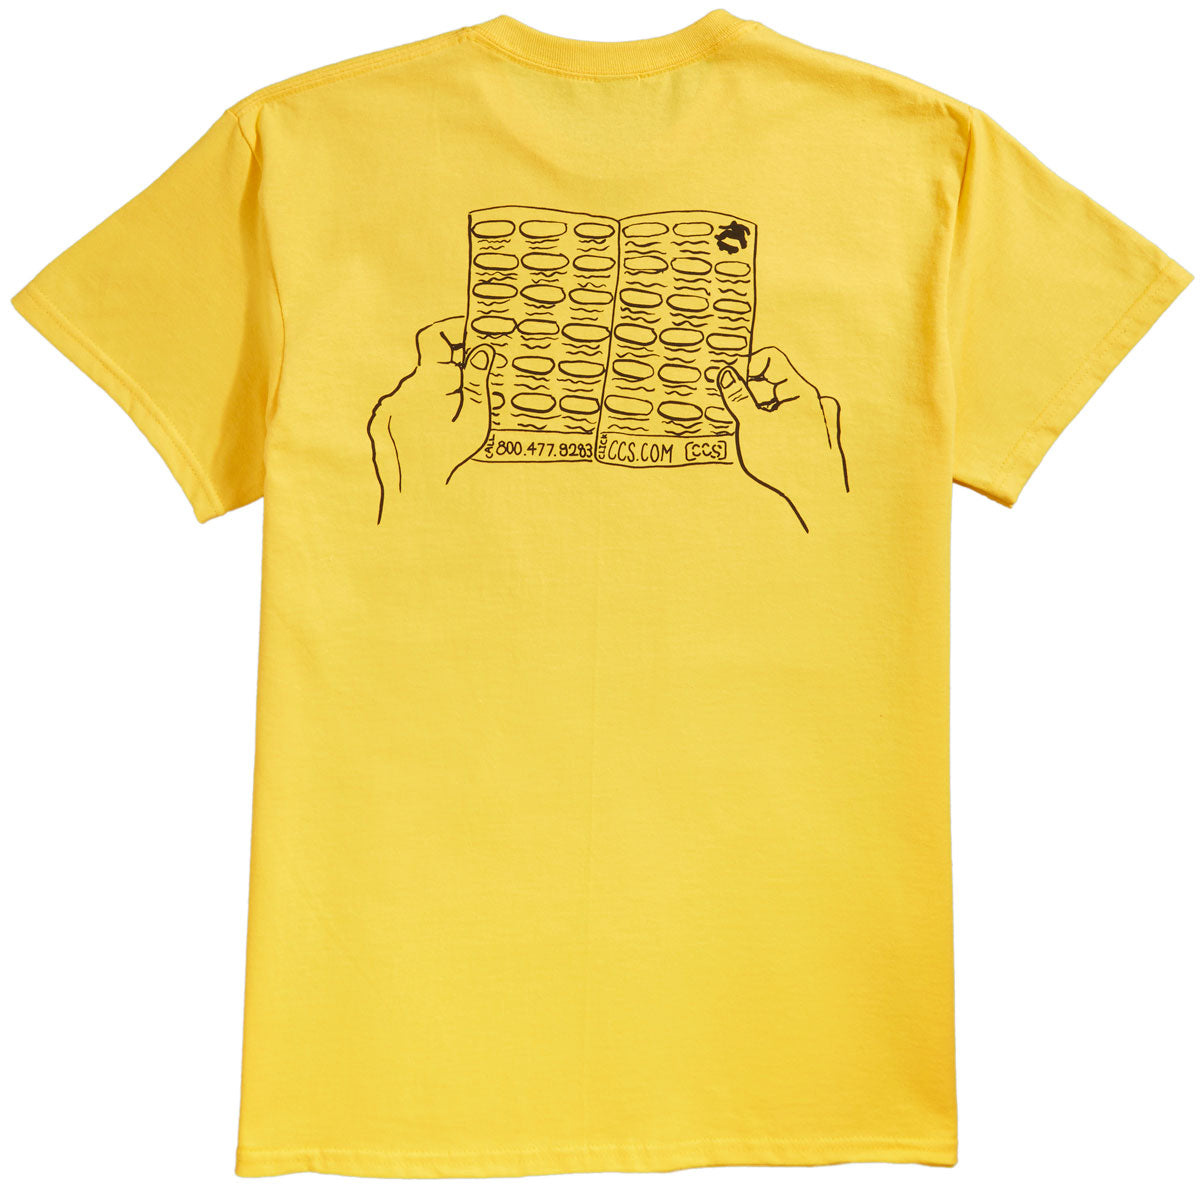 CCS Catalog Sketch T-Shirt - Yellow/Black image 2